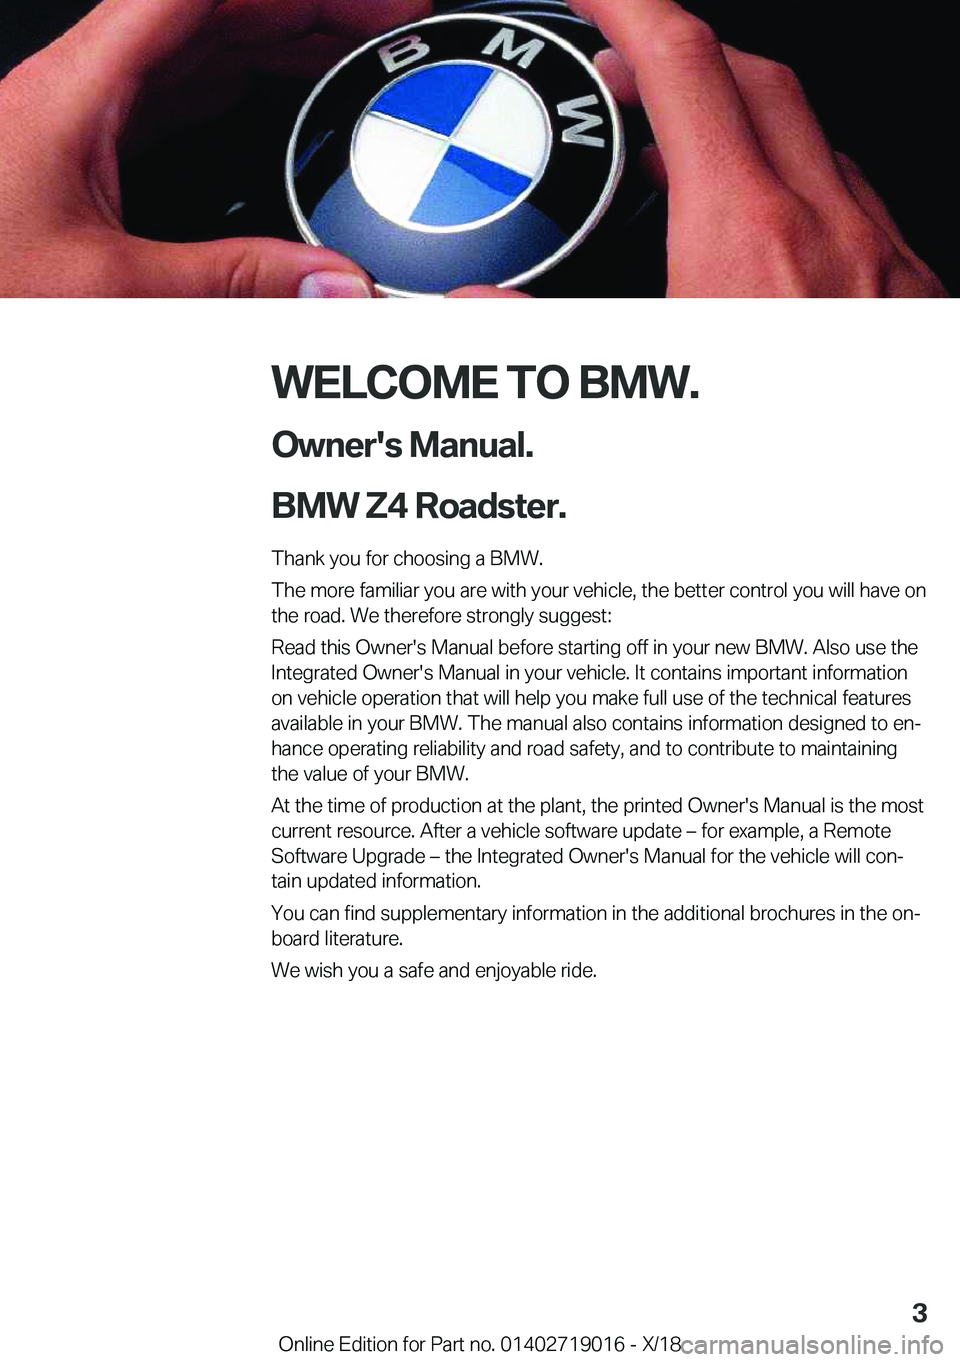 BMW Z4 2019  Owners Manual �W�E�L�C�O�M�E��T�O��B�M�W�.�O�w�n�e�r�'�s��M�a�n�u�a�l�.
�B�M�W��Z�4��R�o�a�d�s�t�e�r�.
�T�h�a�n�k��y�o�u��f�o�r��c�h�o�o�s�i�n�g��a��B�M�W�.
�T�h�e��m�o�r�e��f�a�m�i�l�i�a�r��y�o�u�